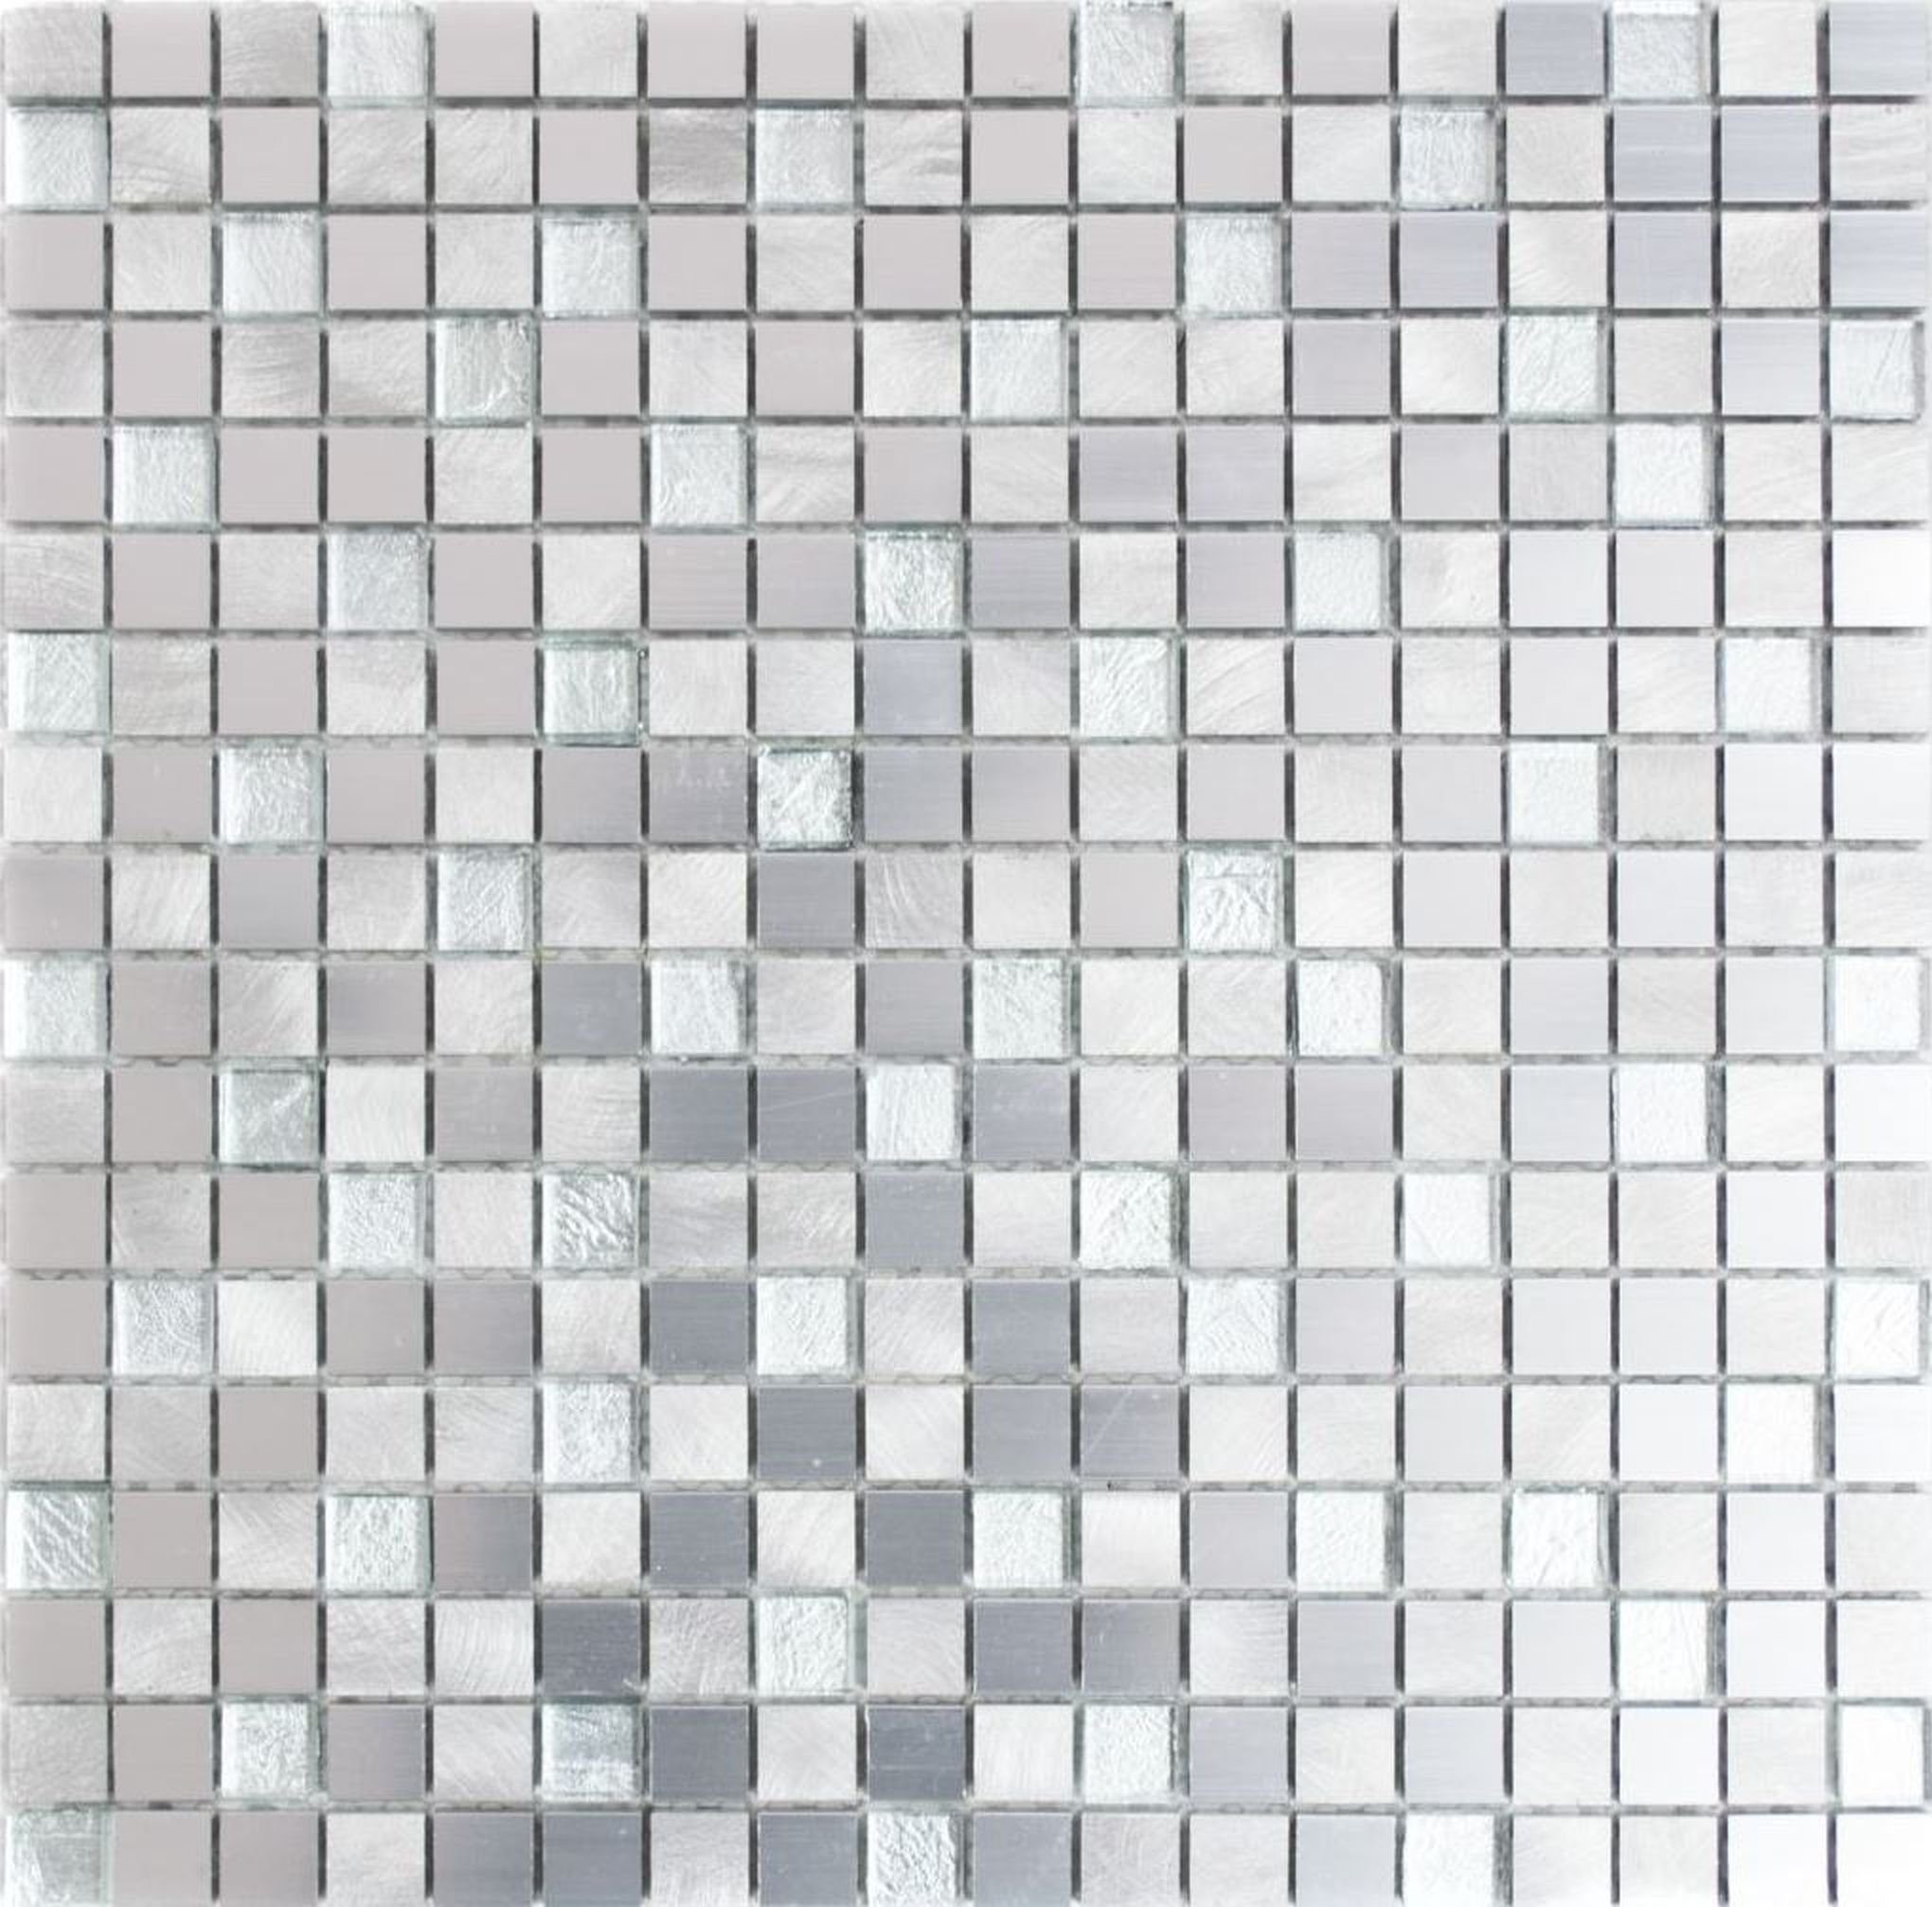 Mosani Mosaikfliesen Mosaik Fliese Aluminium Glasmosaik silber Küchenrückwand